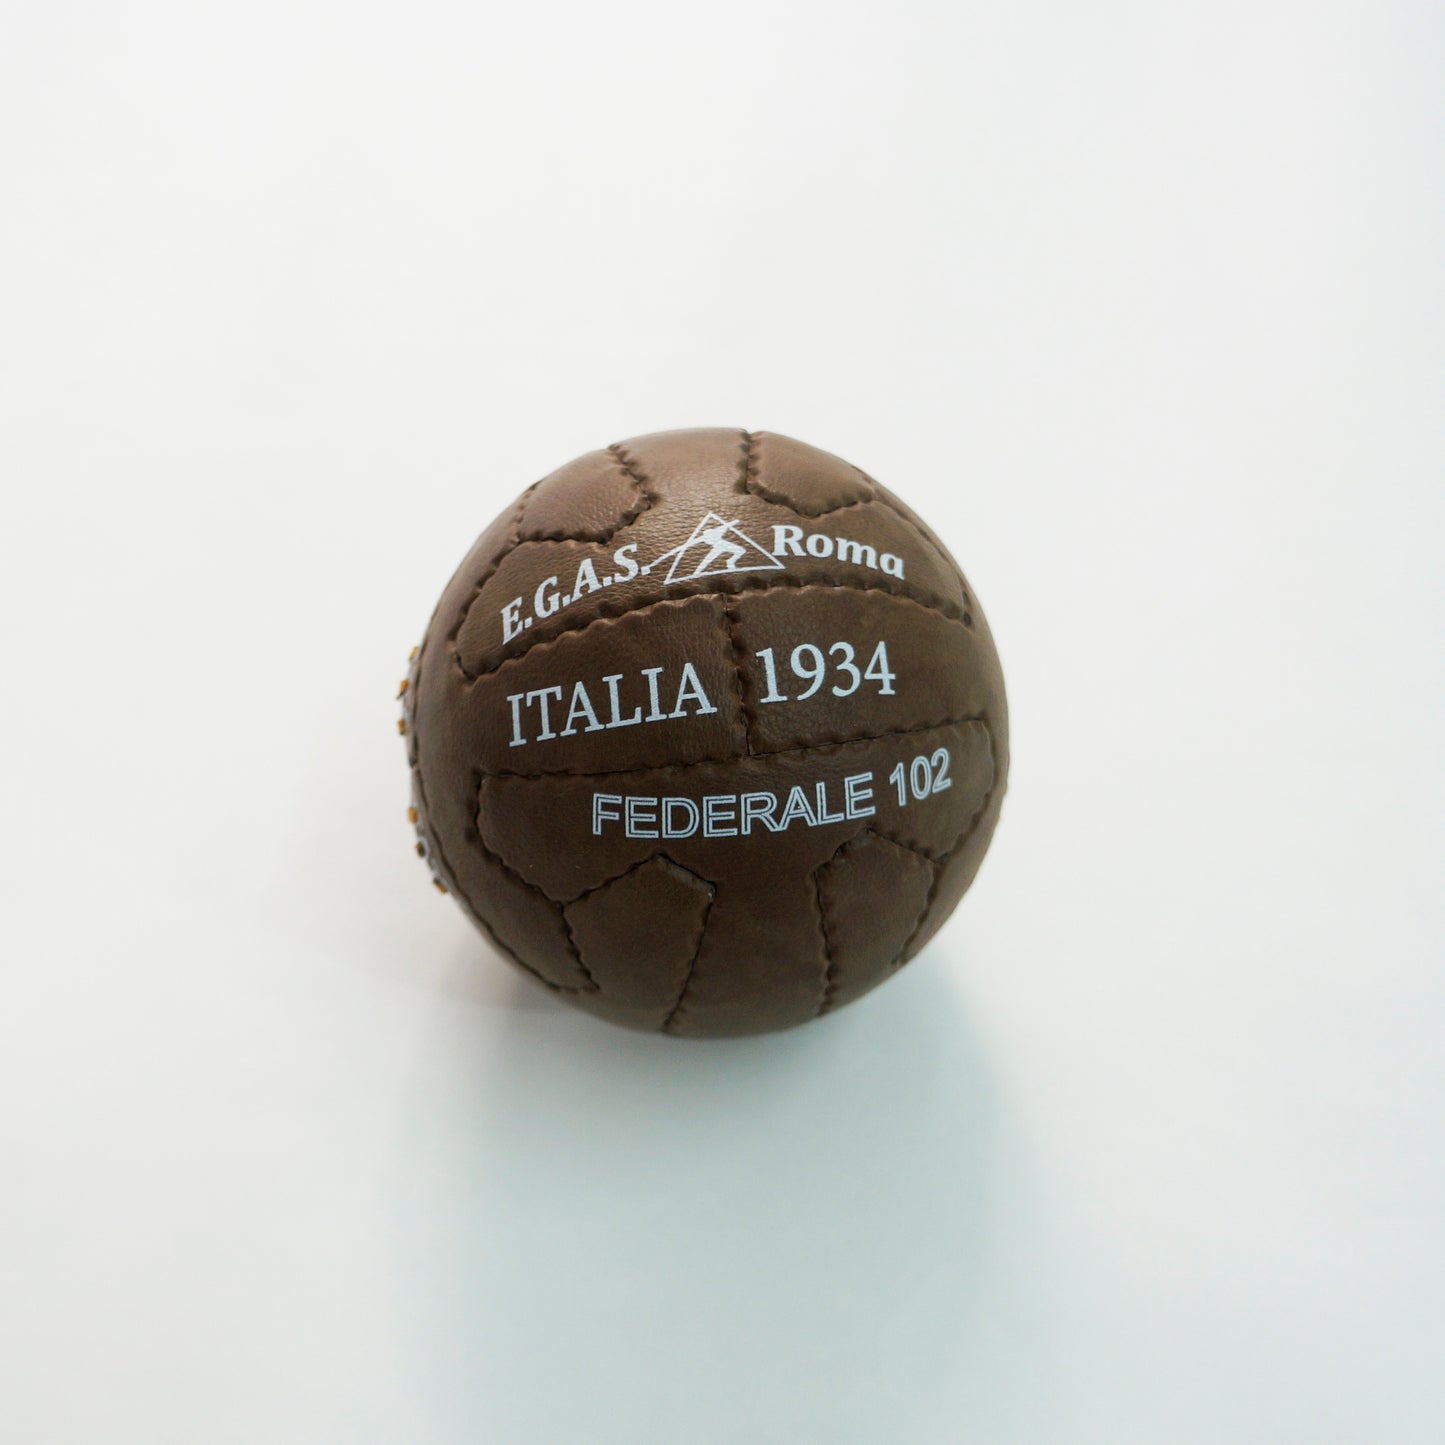 Mini Ball 1934 Italy FEDERALE 102